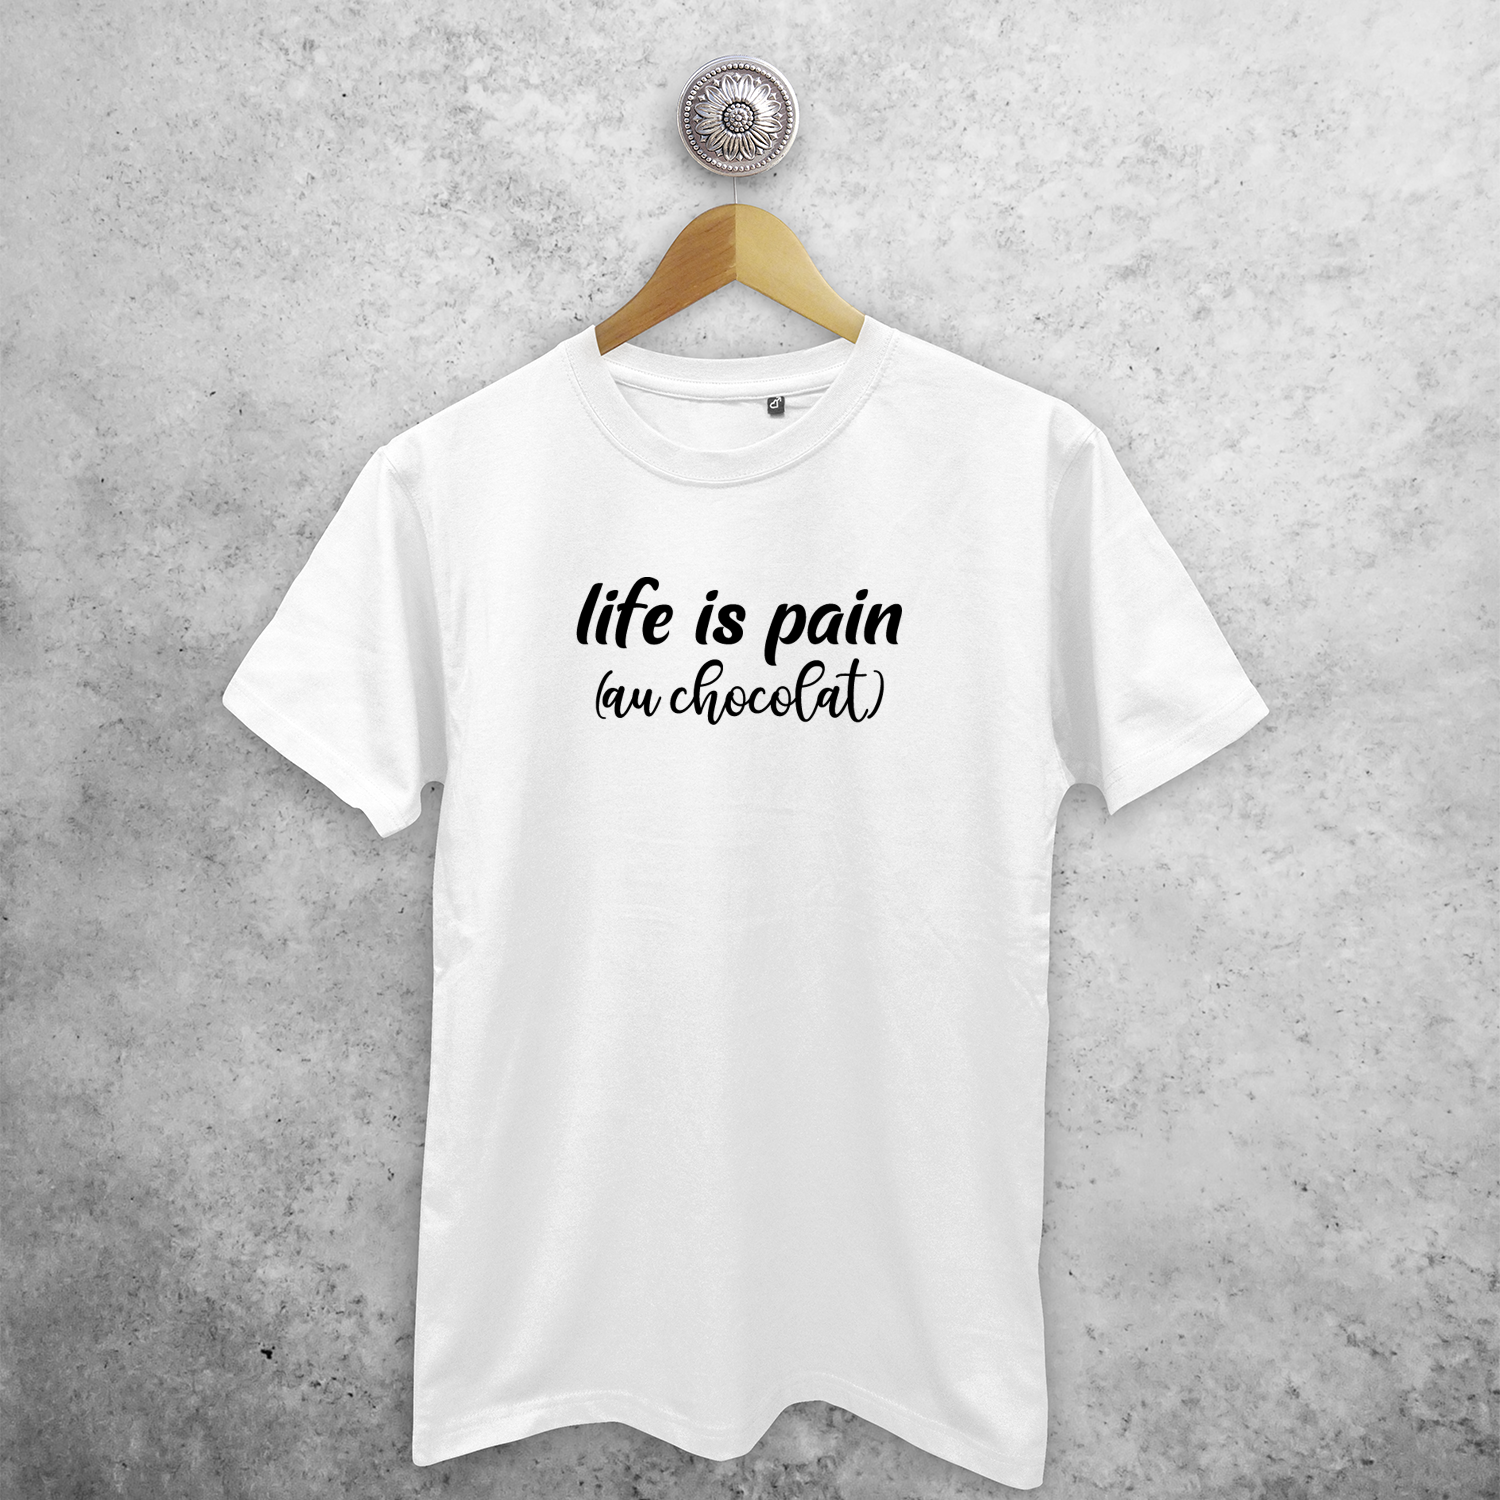 'Life is pain (au chocolat)' adult shirt